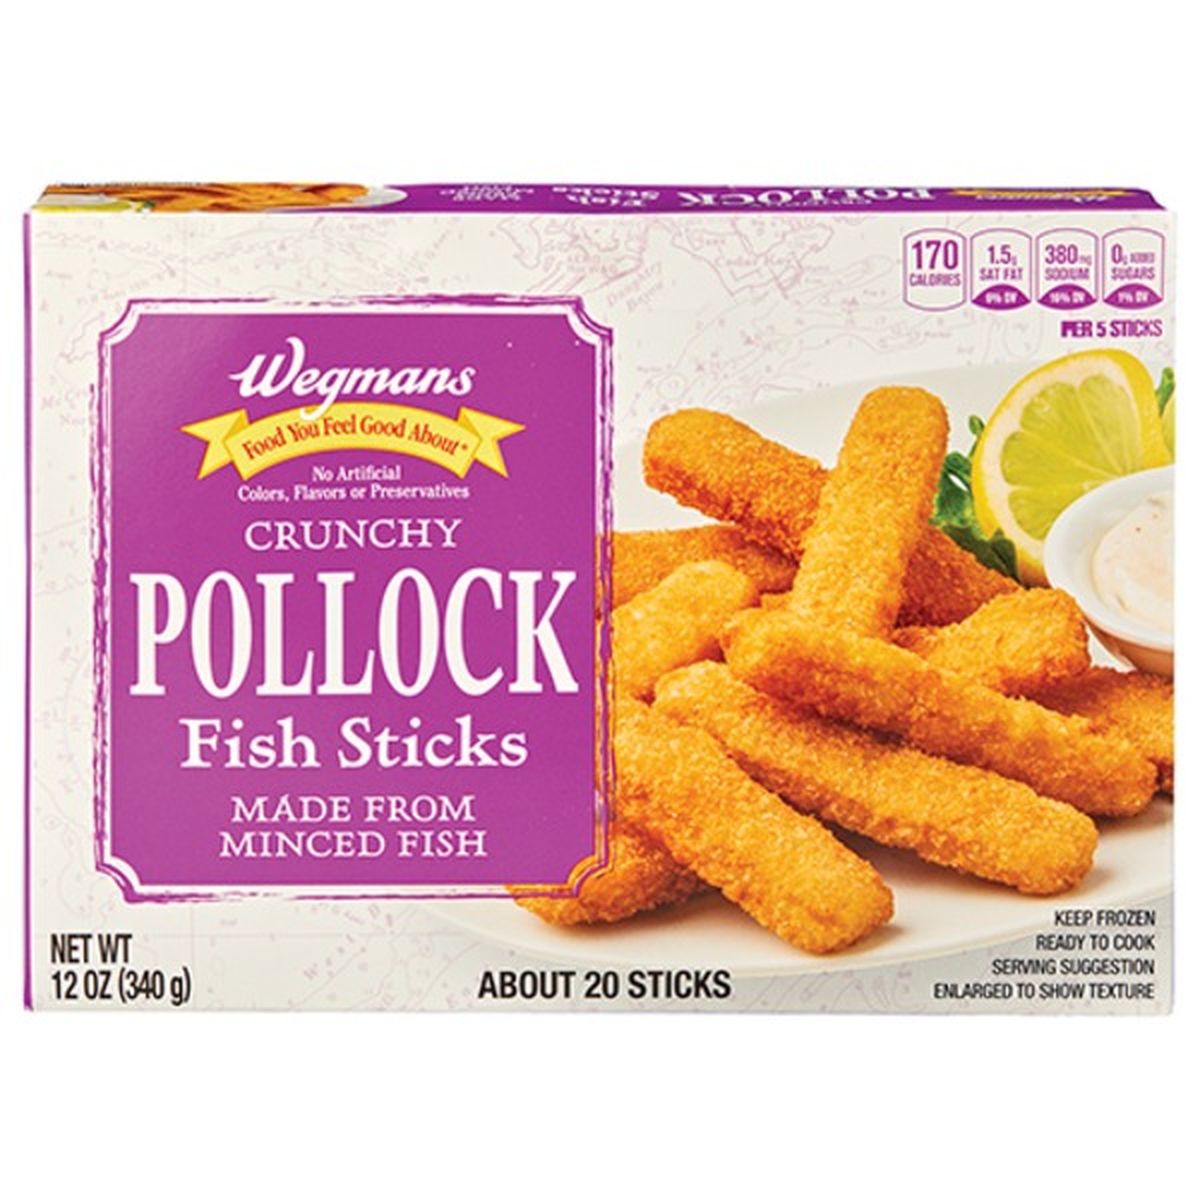 Calories in Wegmans Crunchy Pollock Fish Sticks